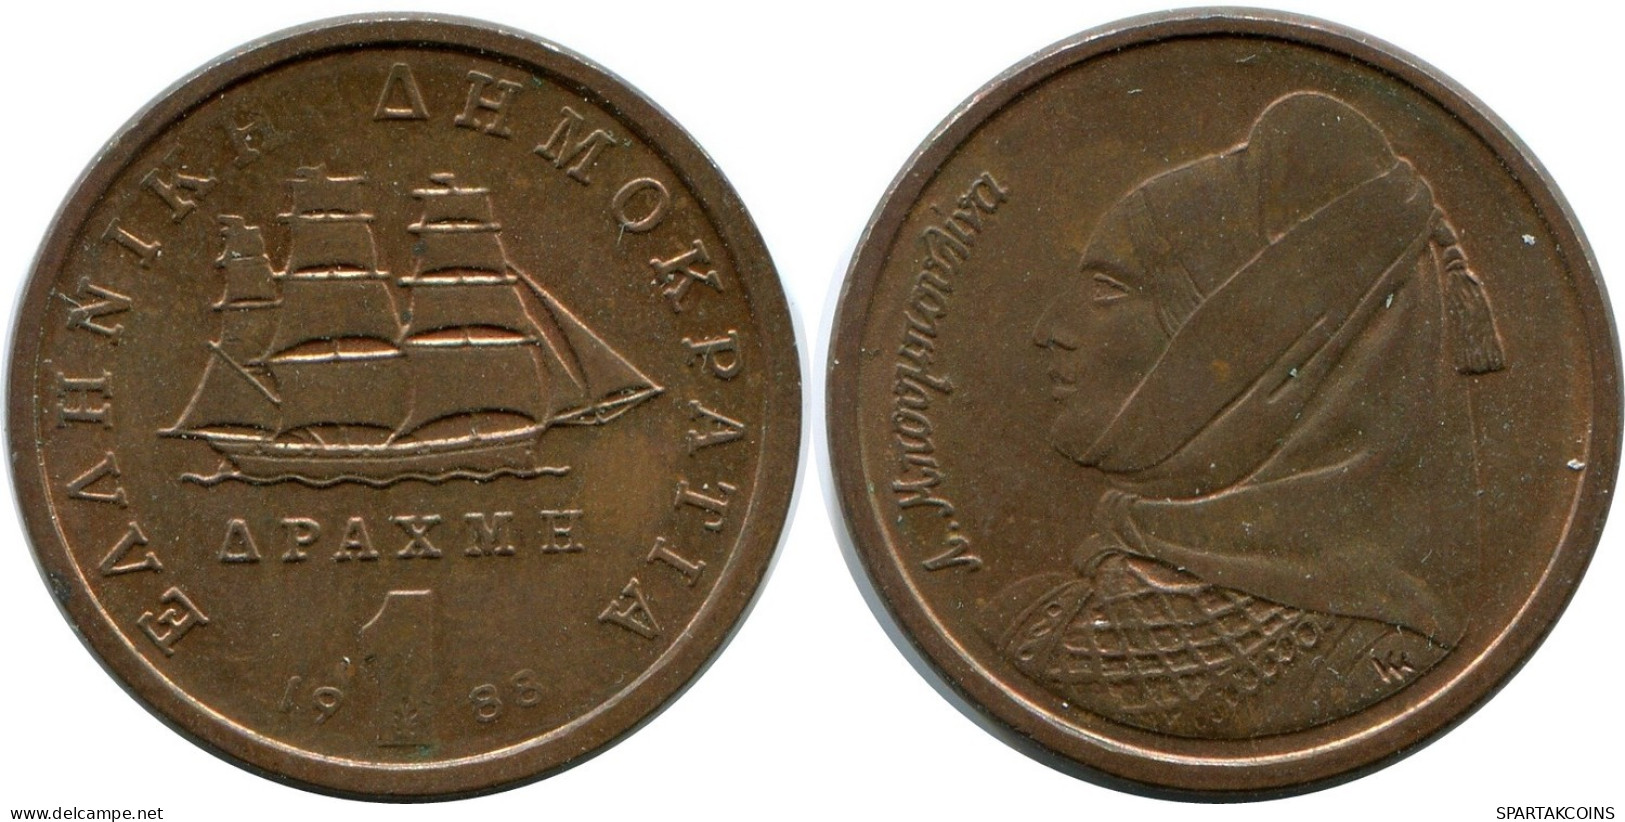 1 DRACHMA 1988 GRECIA GREECE Moneda #AY620.E.A - Griekenland